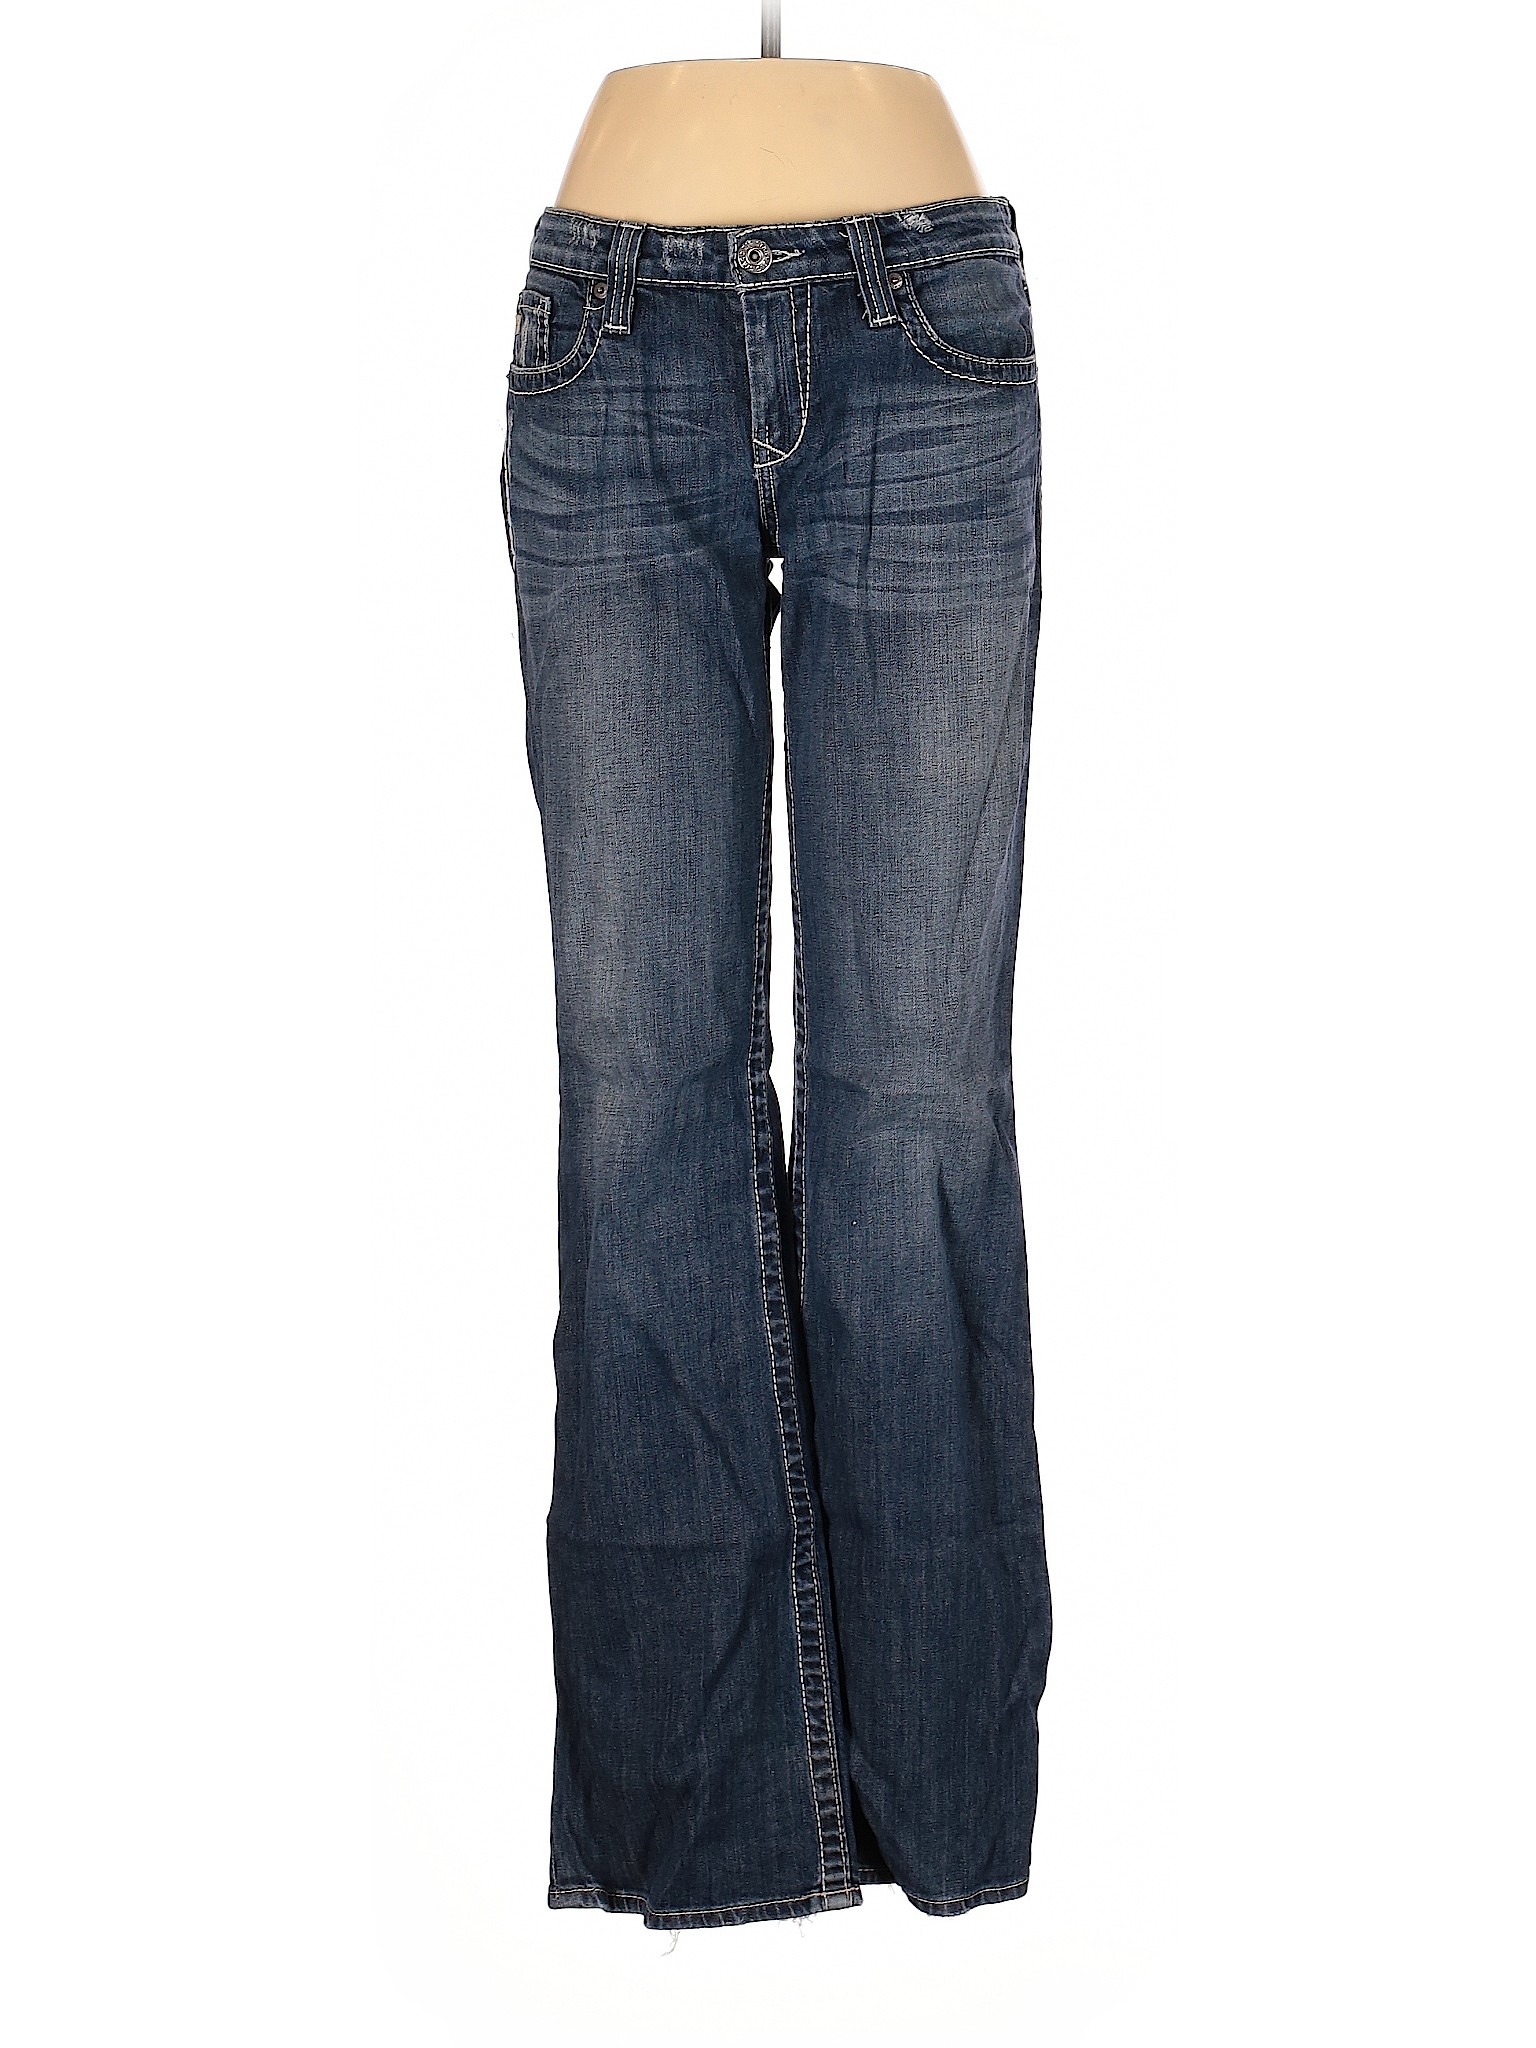 Big Star Women Blue Jeans 28W | eBay